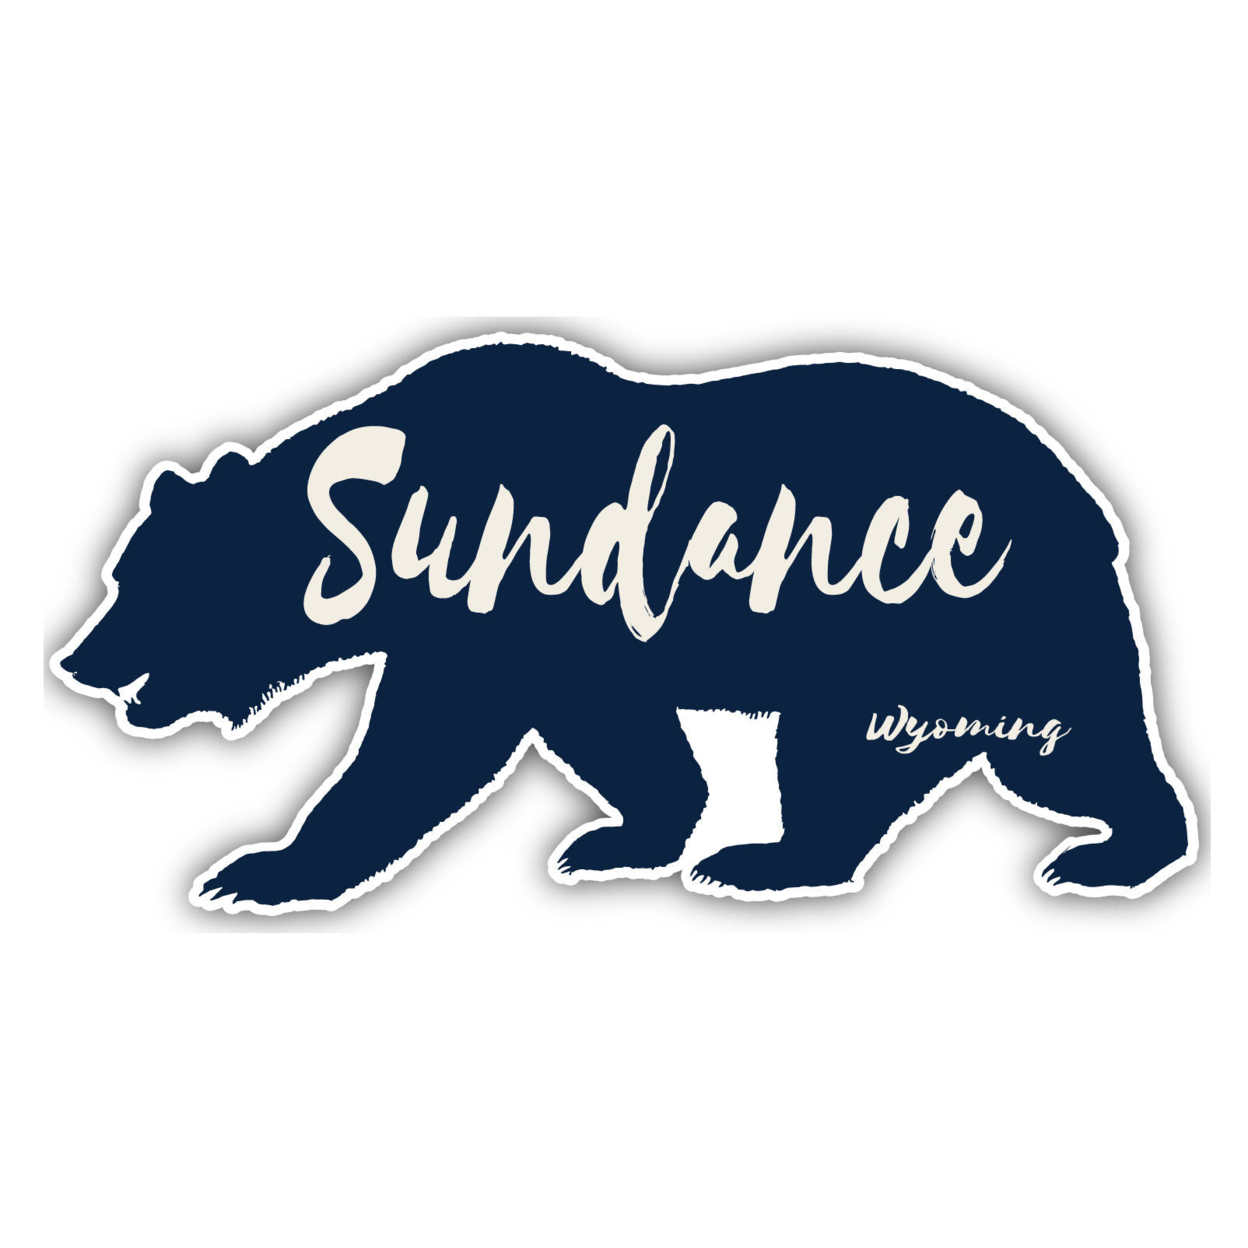 Sundance Wyoming Souvenir Decorative Stickers (Choose Theme And Size) - Single Unit, 4-Inch, Bear